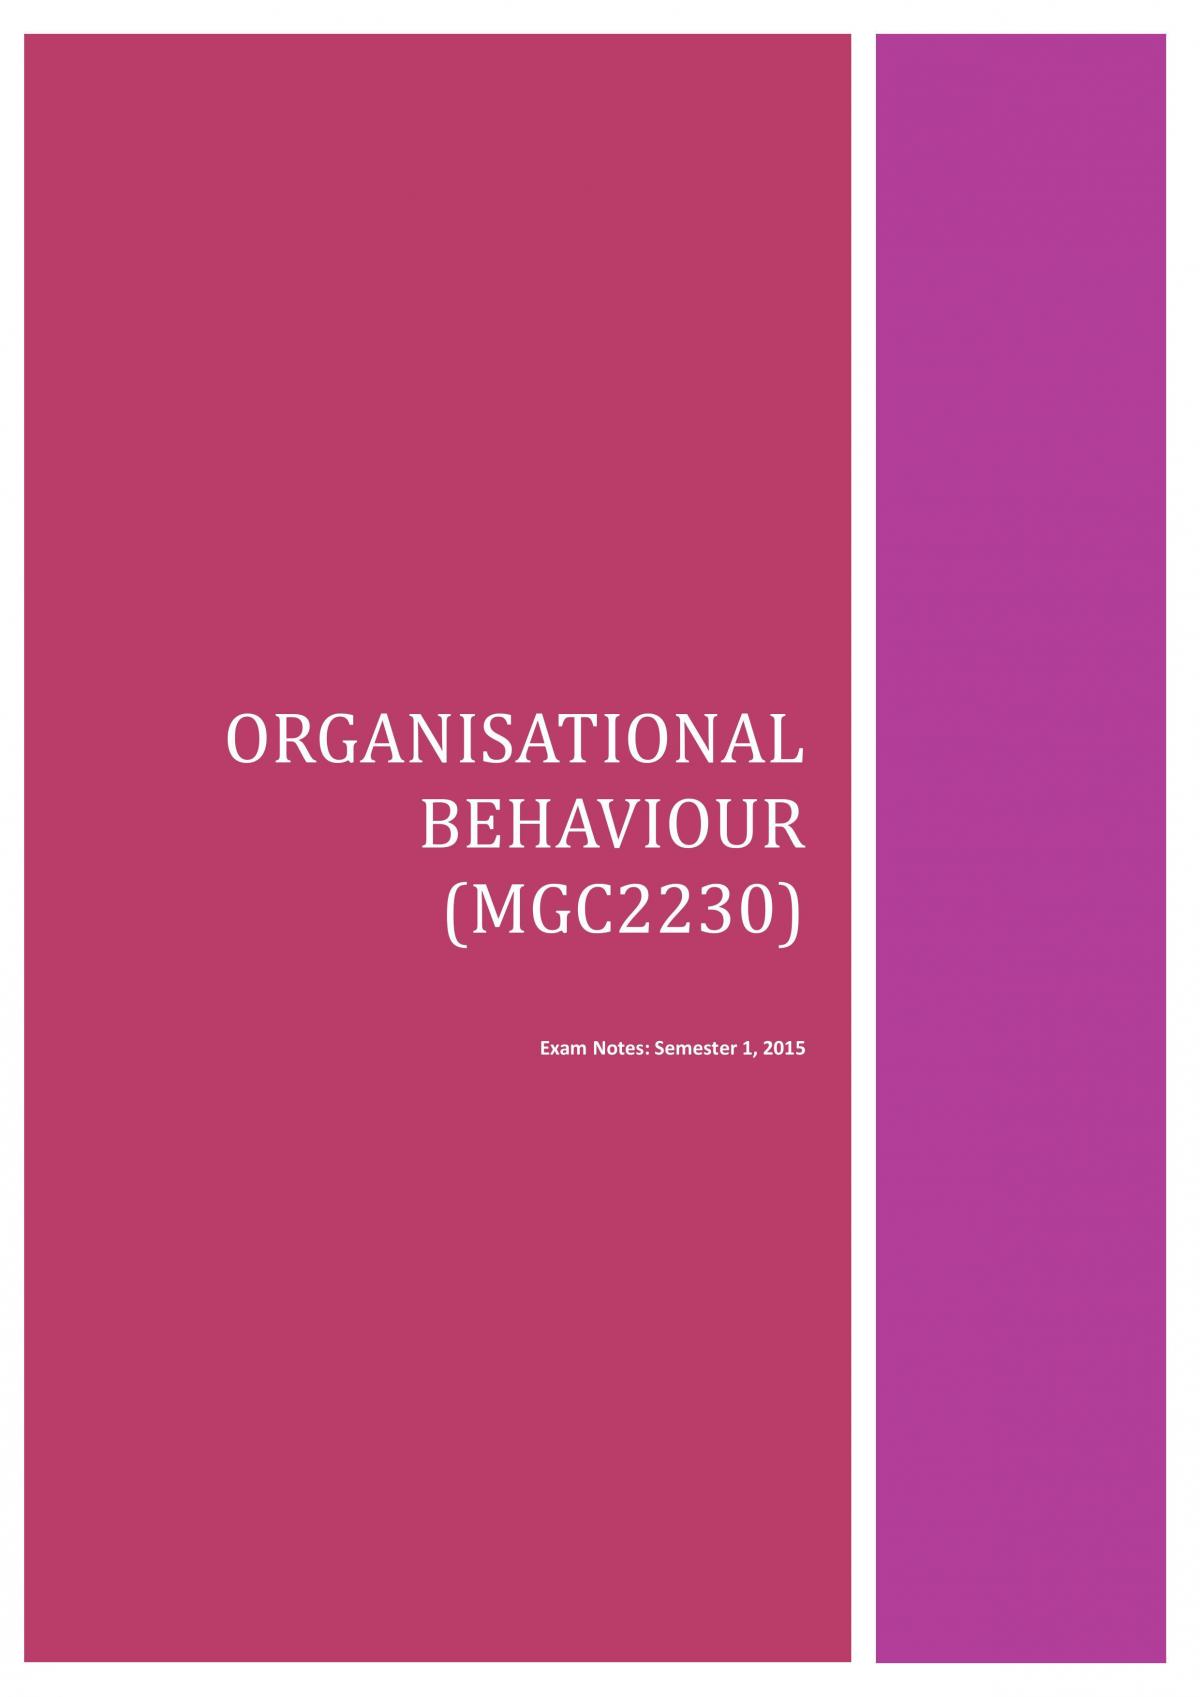 MGC2230 Organisational Behaviour Full Study Notes - Page 1